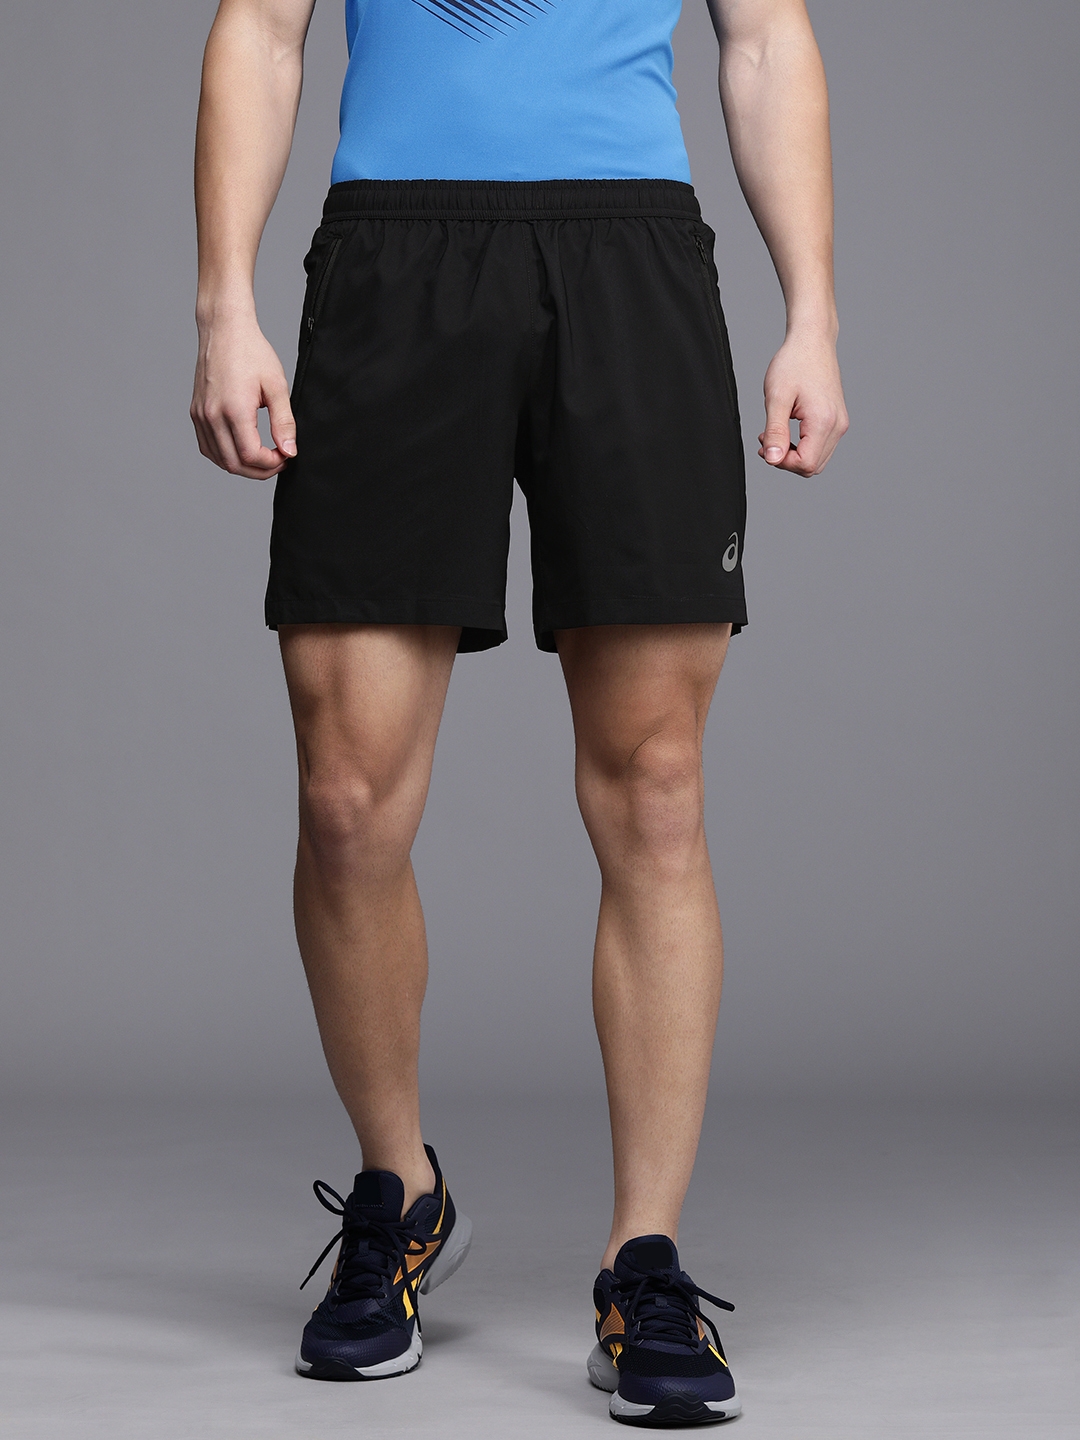 ASICS Men Black Solid 7IN Woven Running Sports Shorts